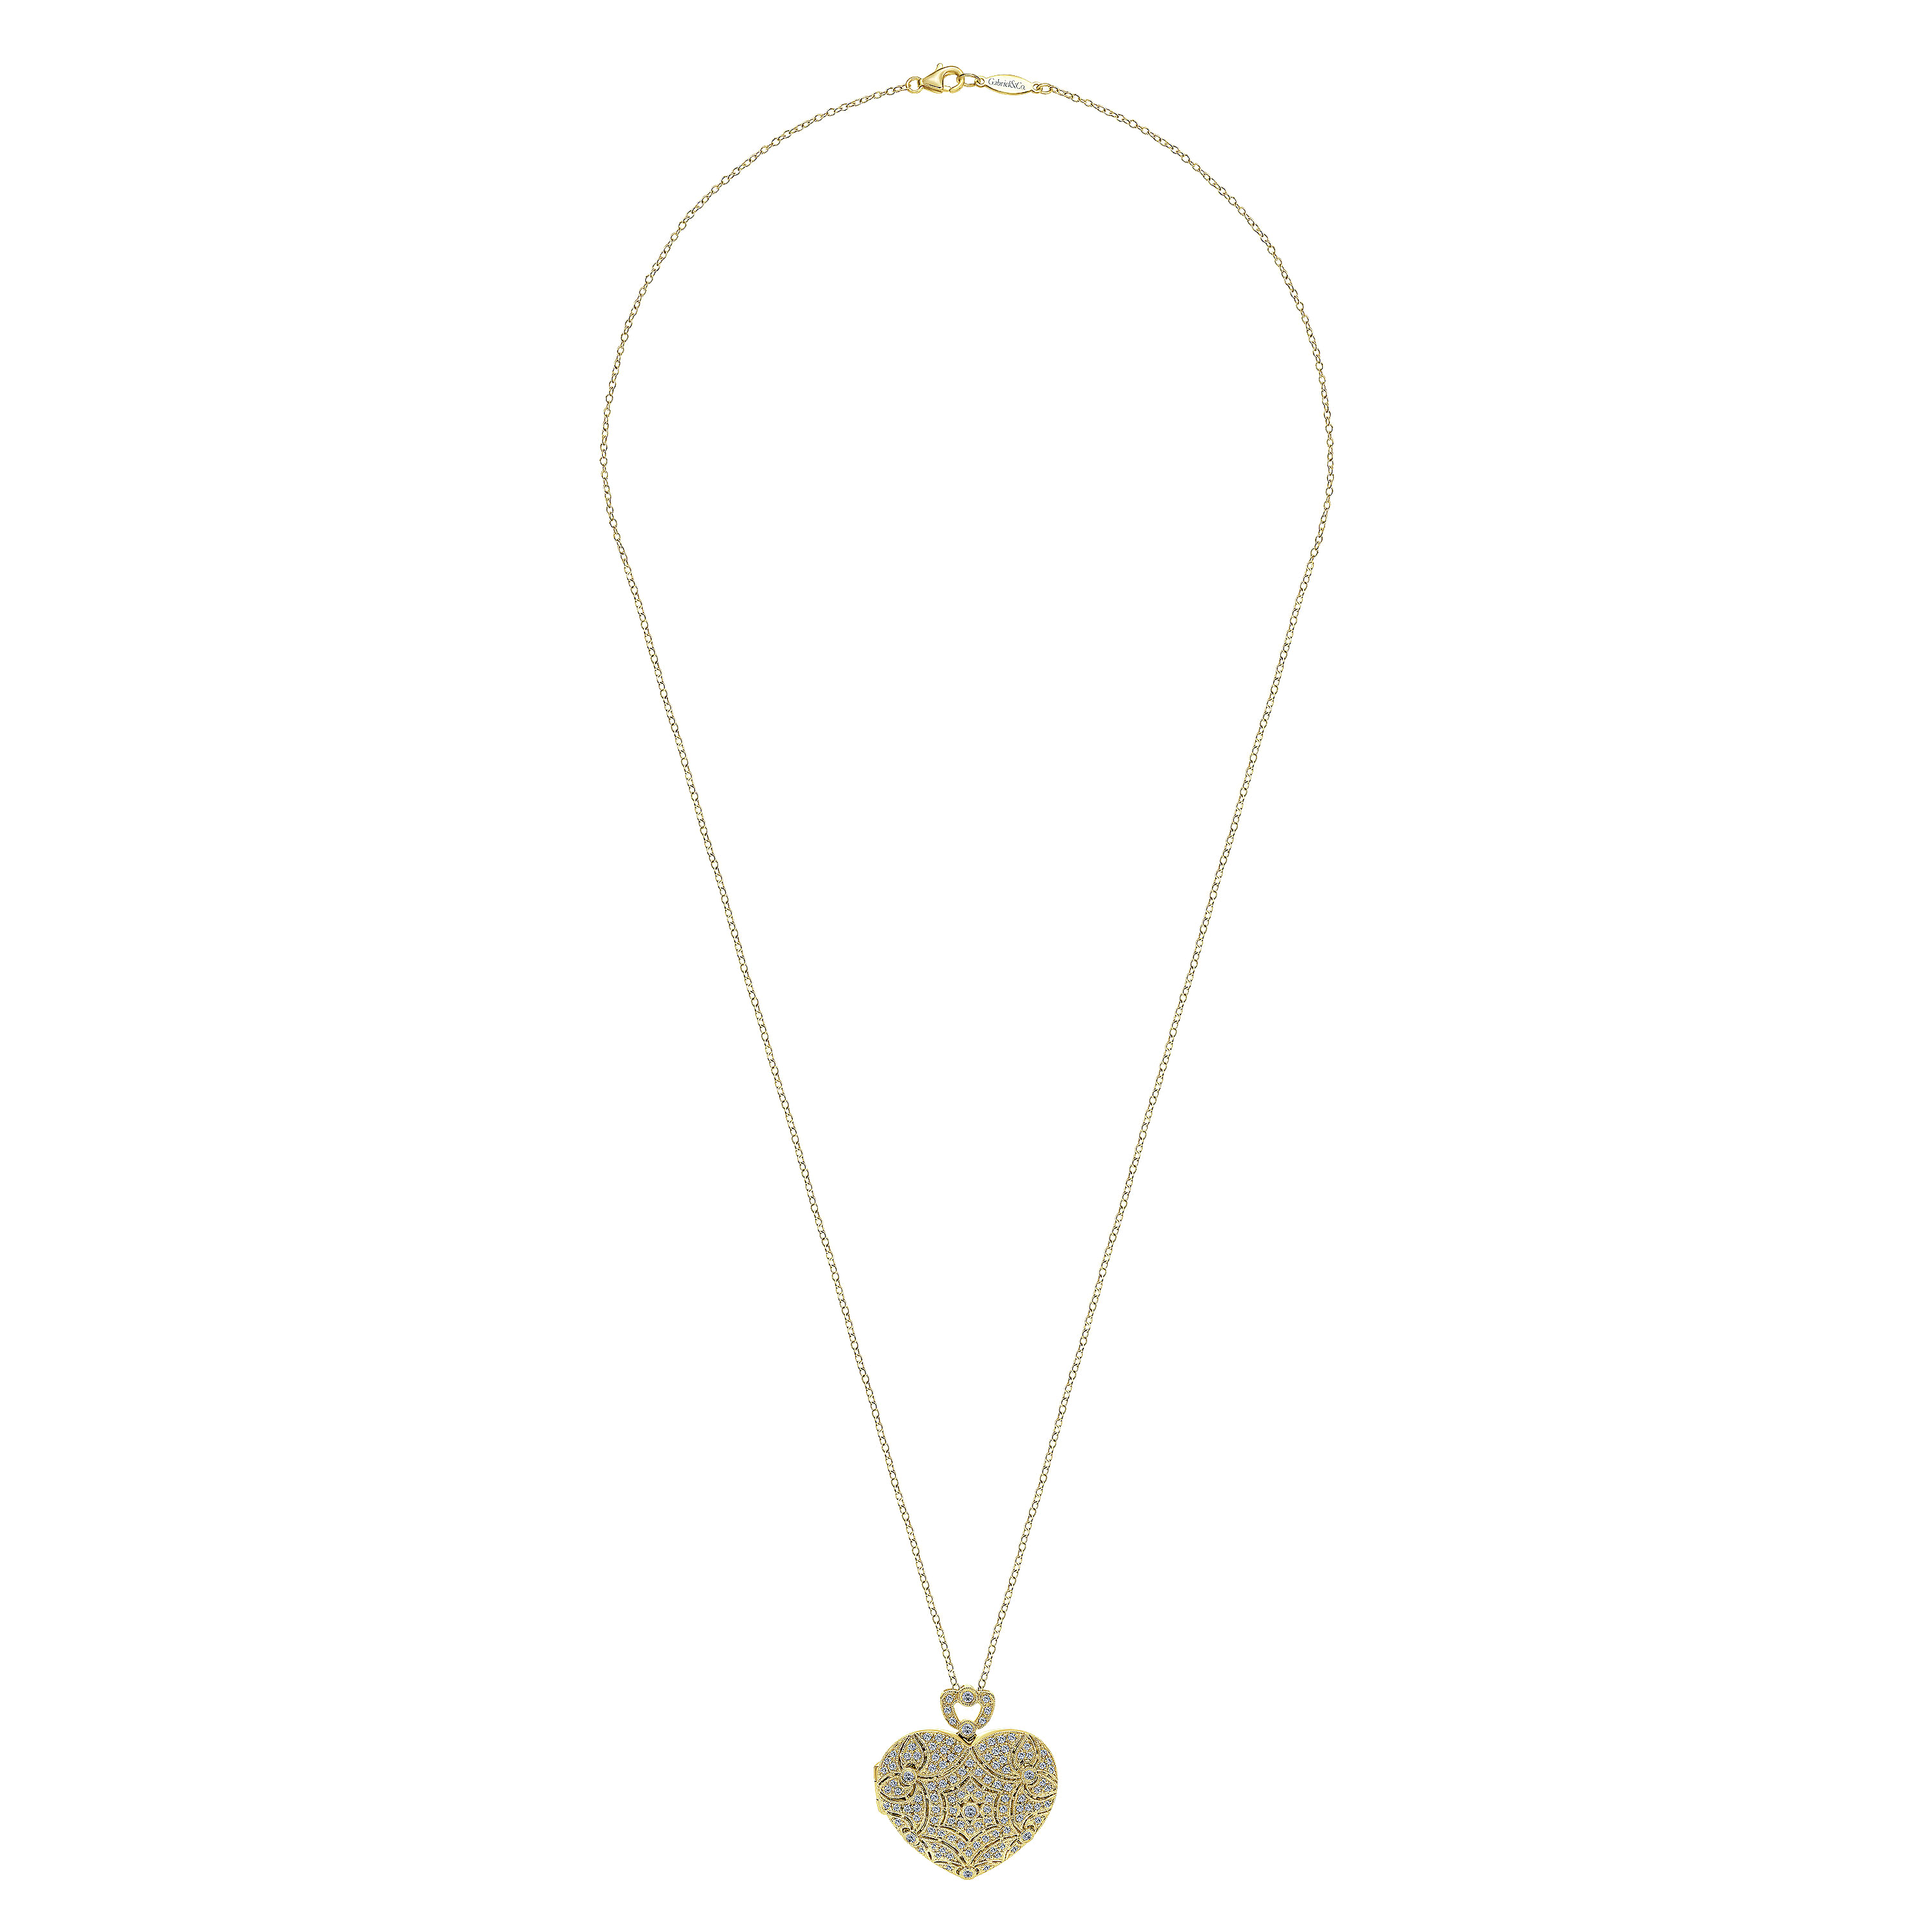 24 inch Vintage Inspired 14K Yellow Gold Heart Shaped Filigree Diamond Locket Necklace